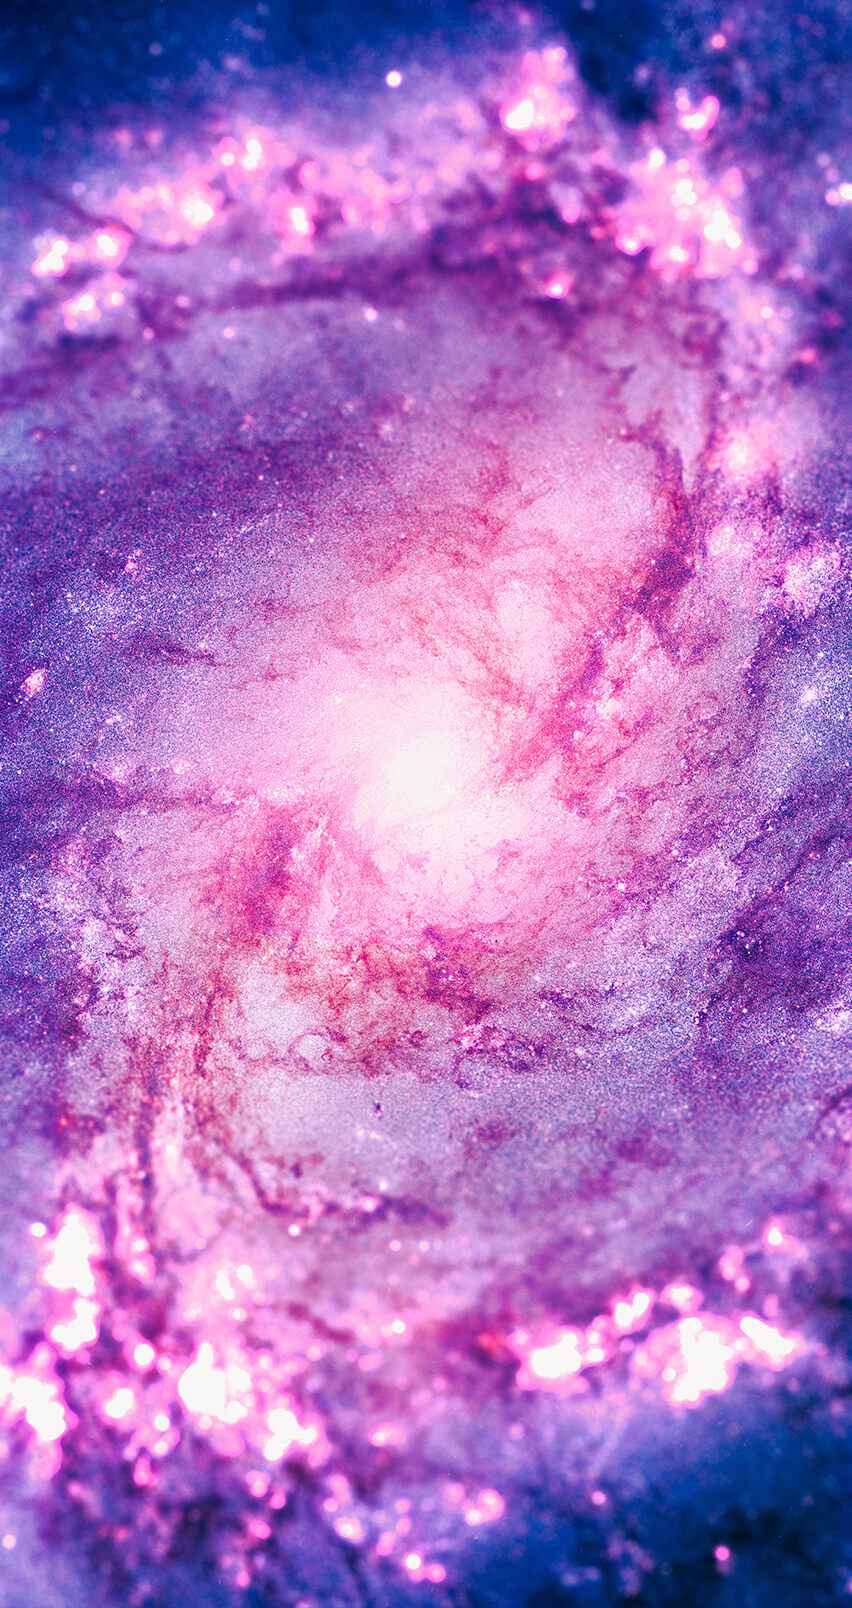 Universe Cosmic IPhone Wallpaper Wallpaper, iPhone Wallpaper